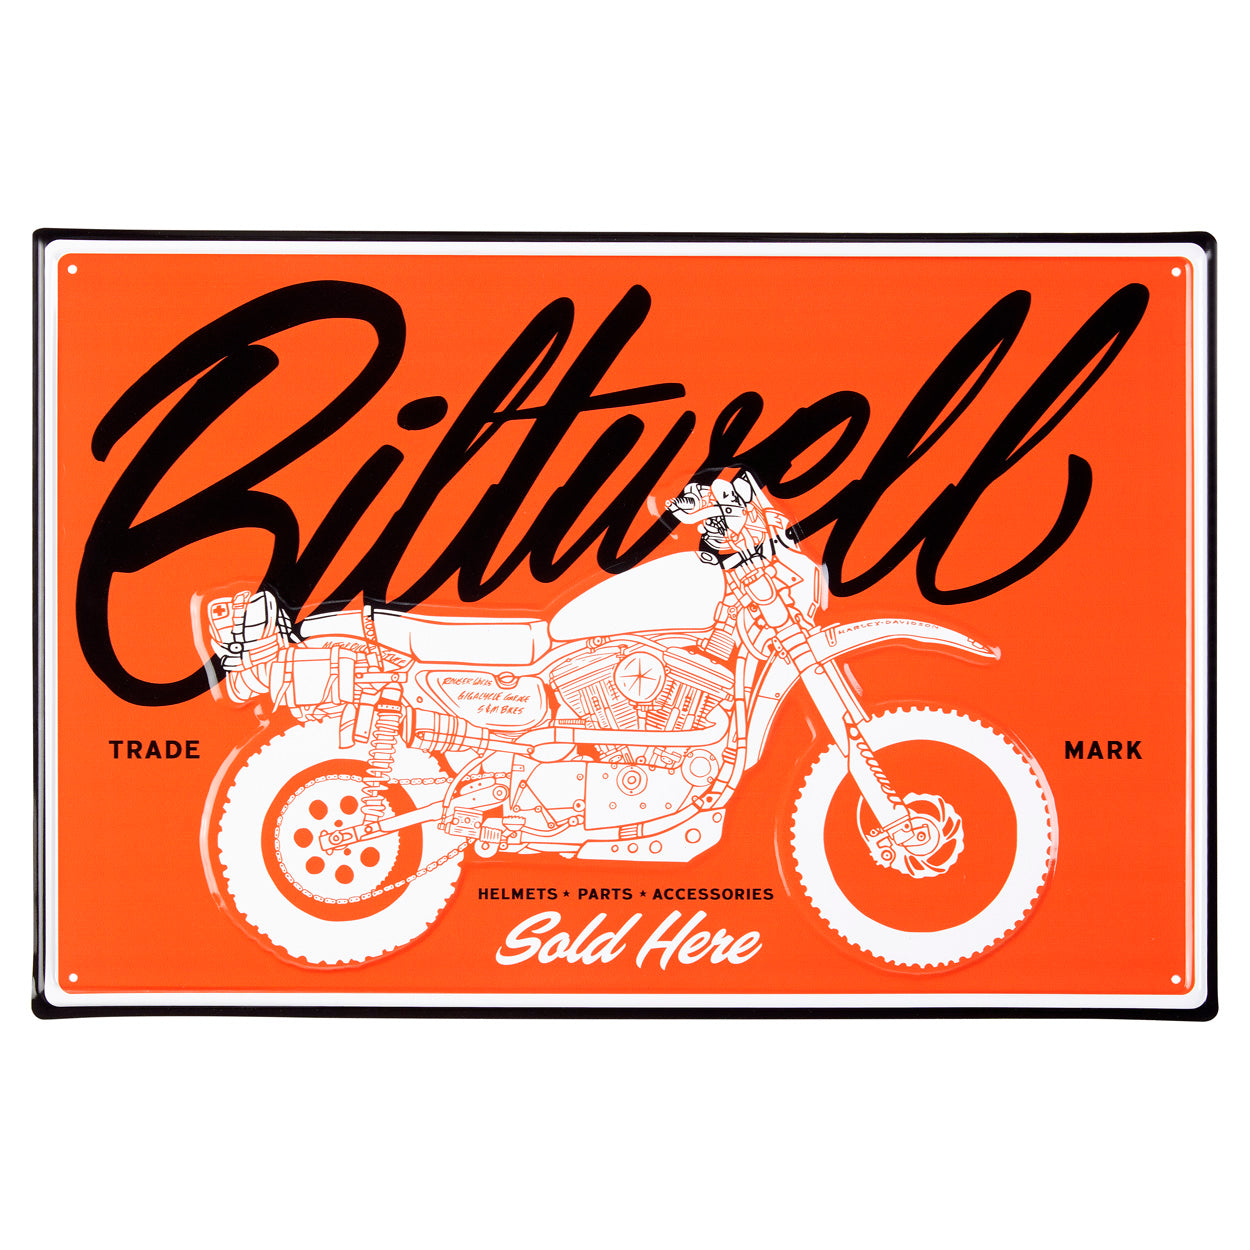 Biltwell Shop Sign - Sold Here